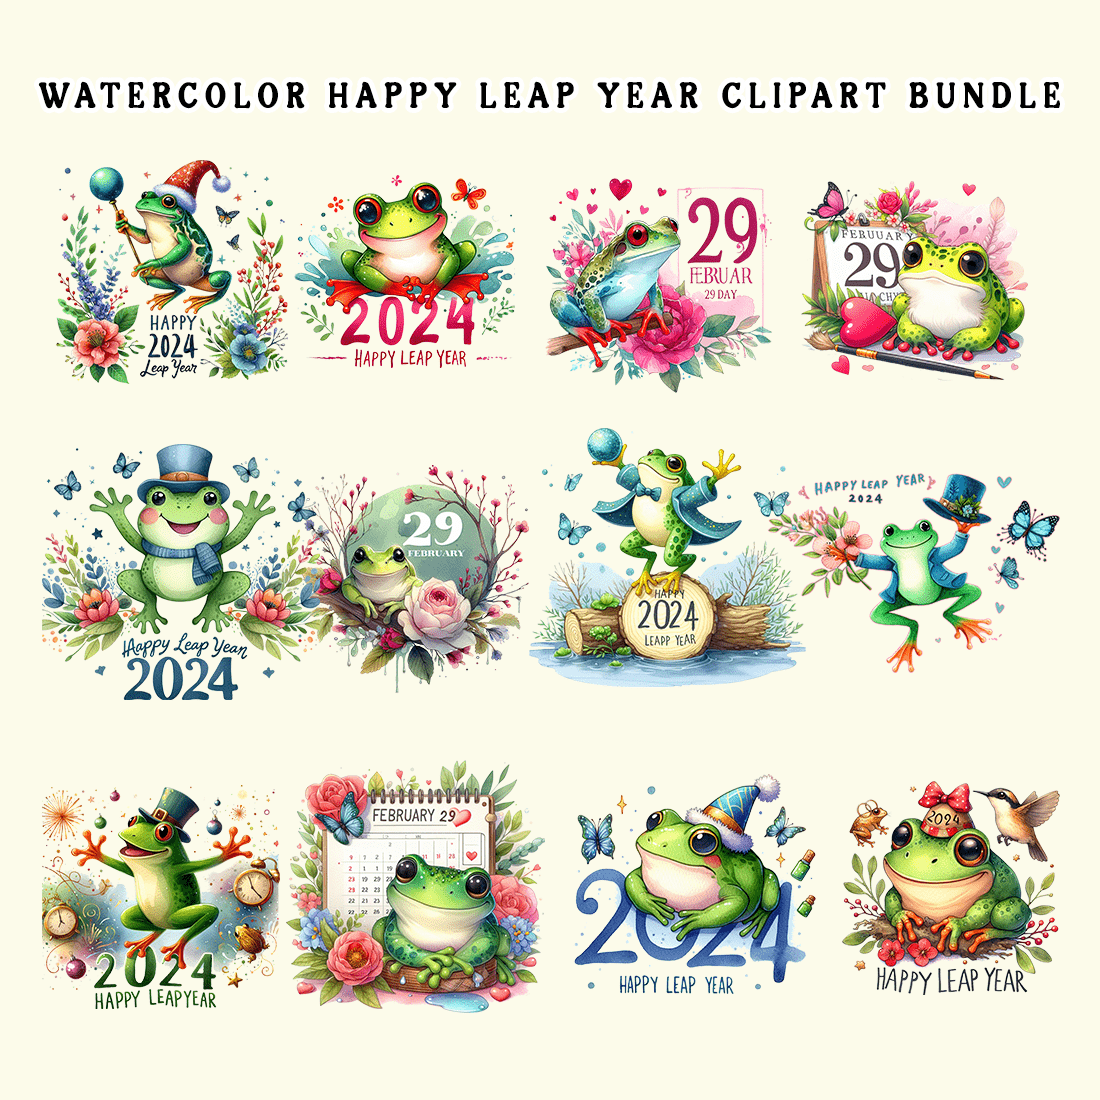 Watercolor Happy Leap Year Clipart Bundle preview image.